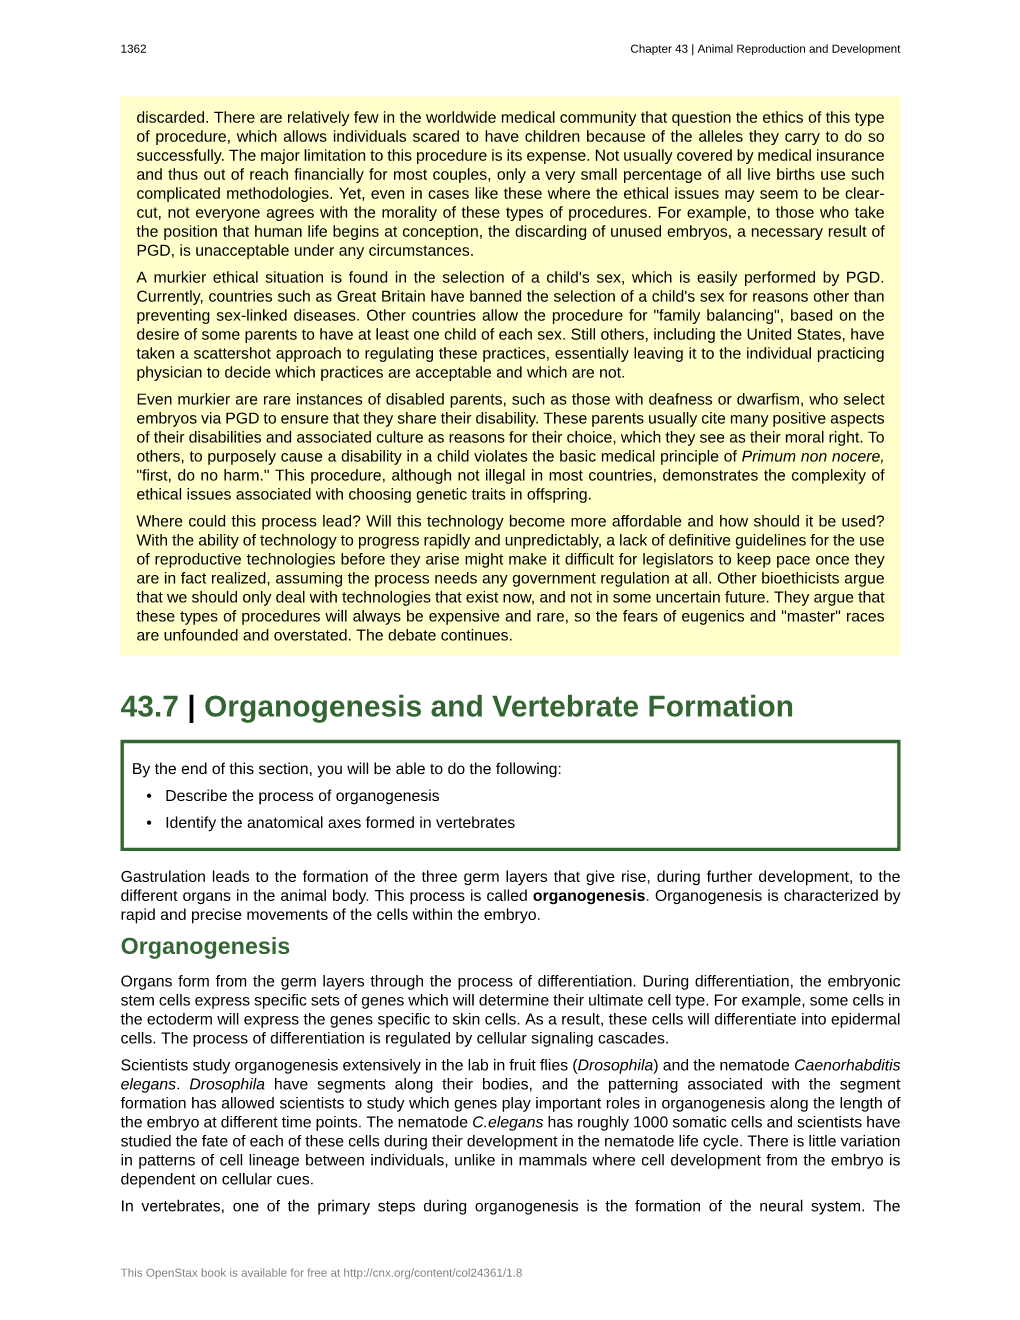 Organogenesis and Vertebrate Formation